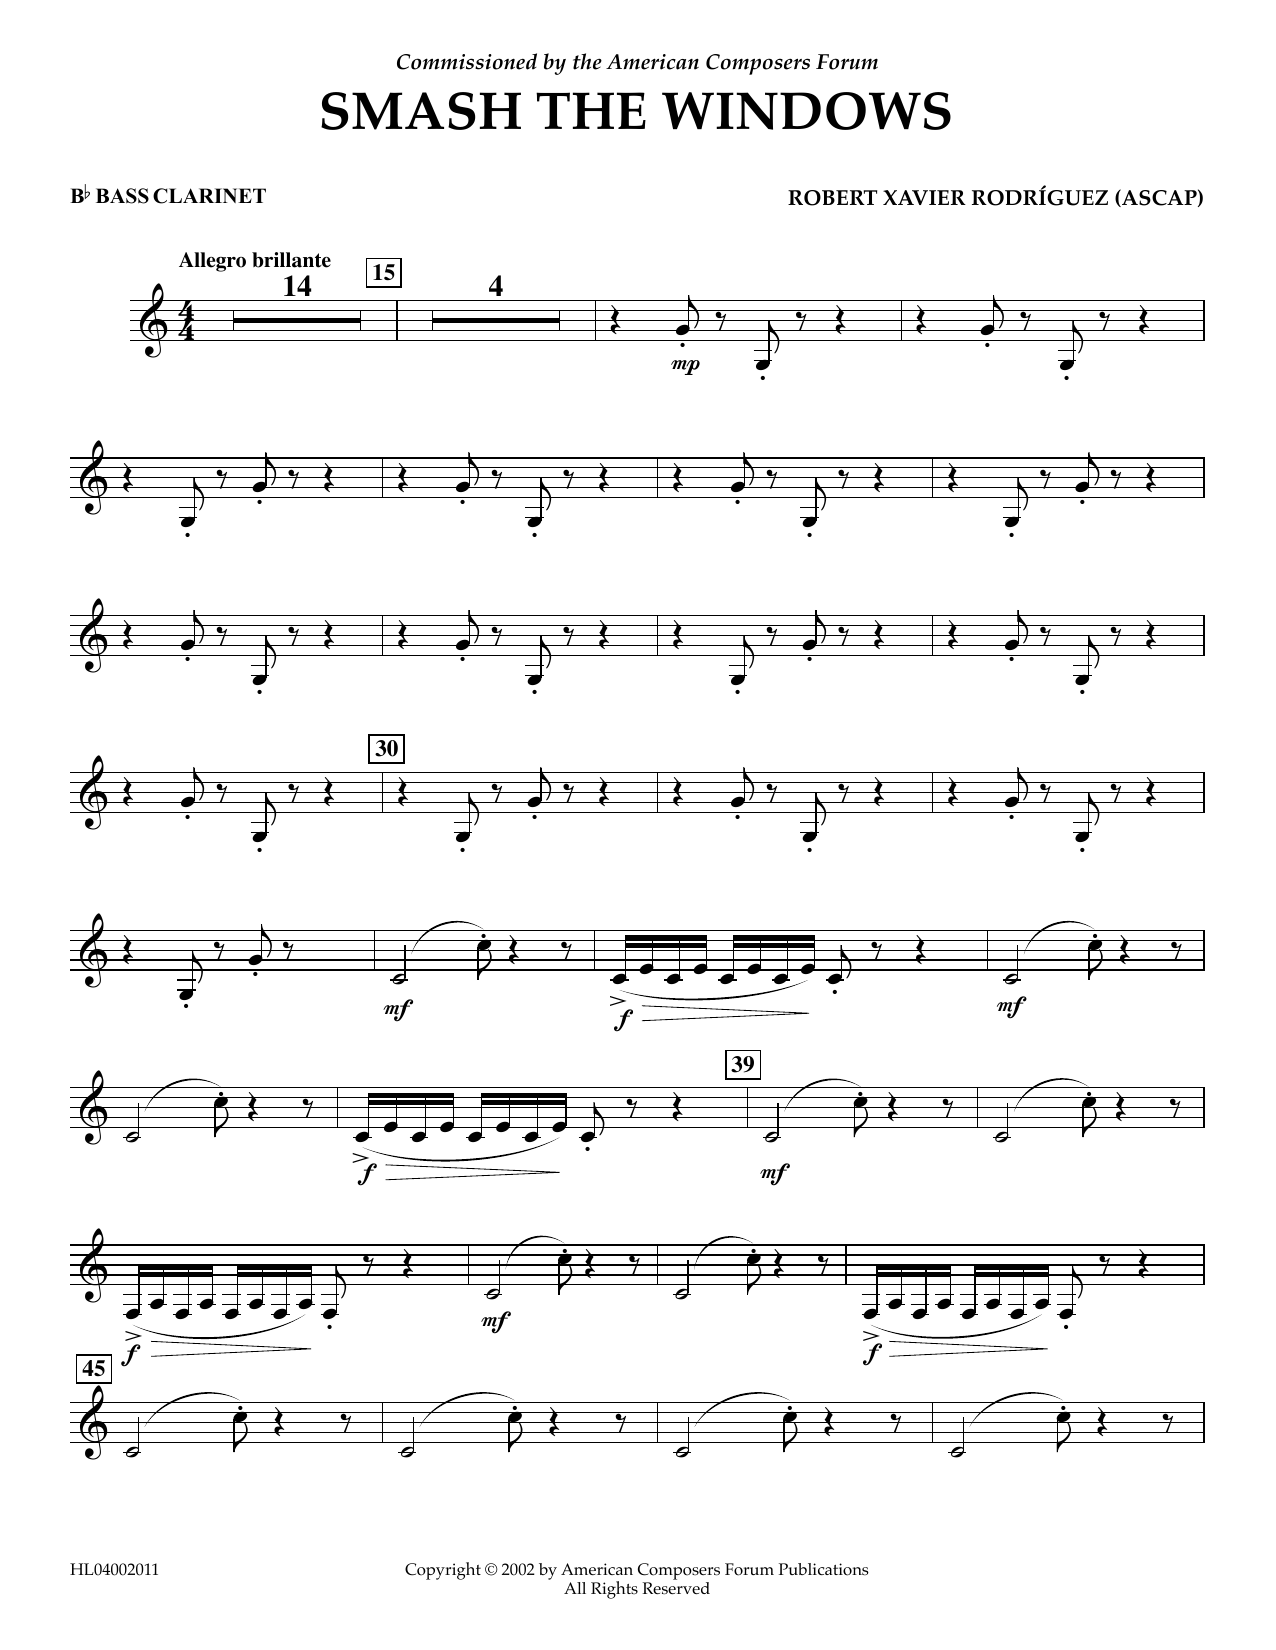 Robert Xavier Rodríguez Smash the Windows - Bb Bass Clarinet Sheet Music Notes & Chords for Concert Band - Download or Print PDF